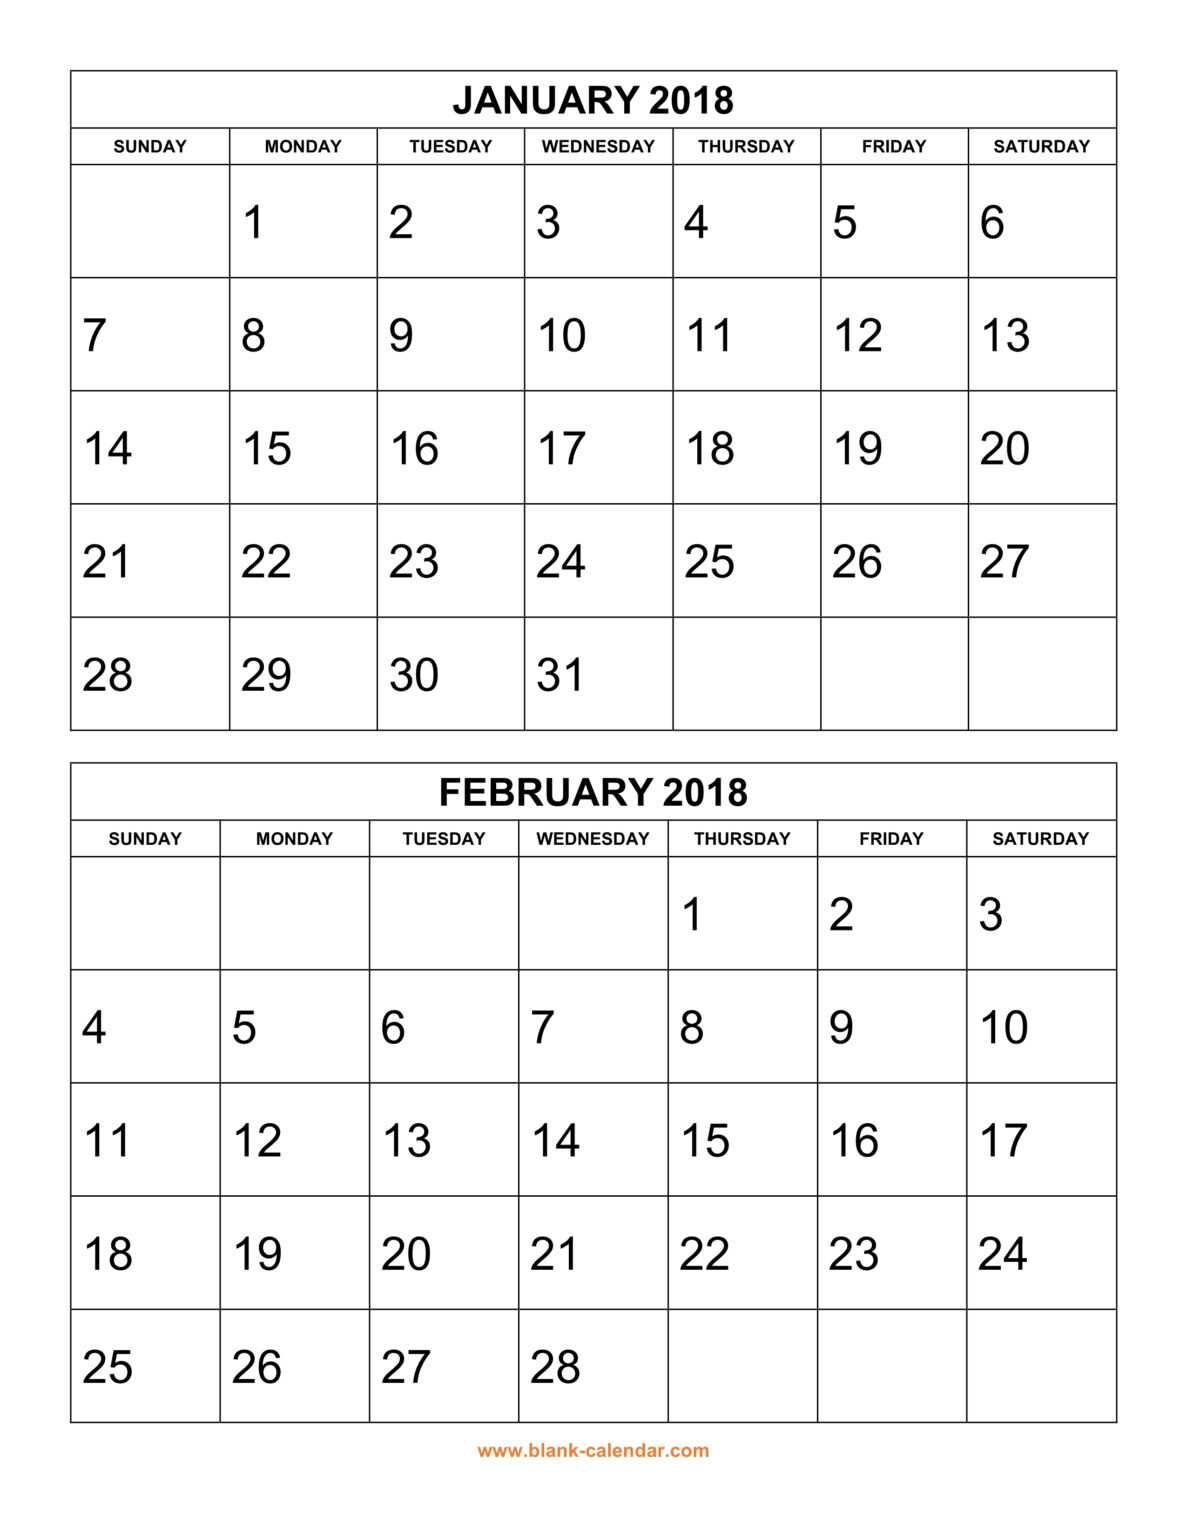 microsoft word calendar template multiple months